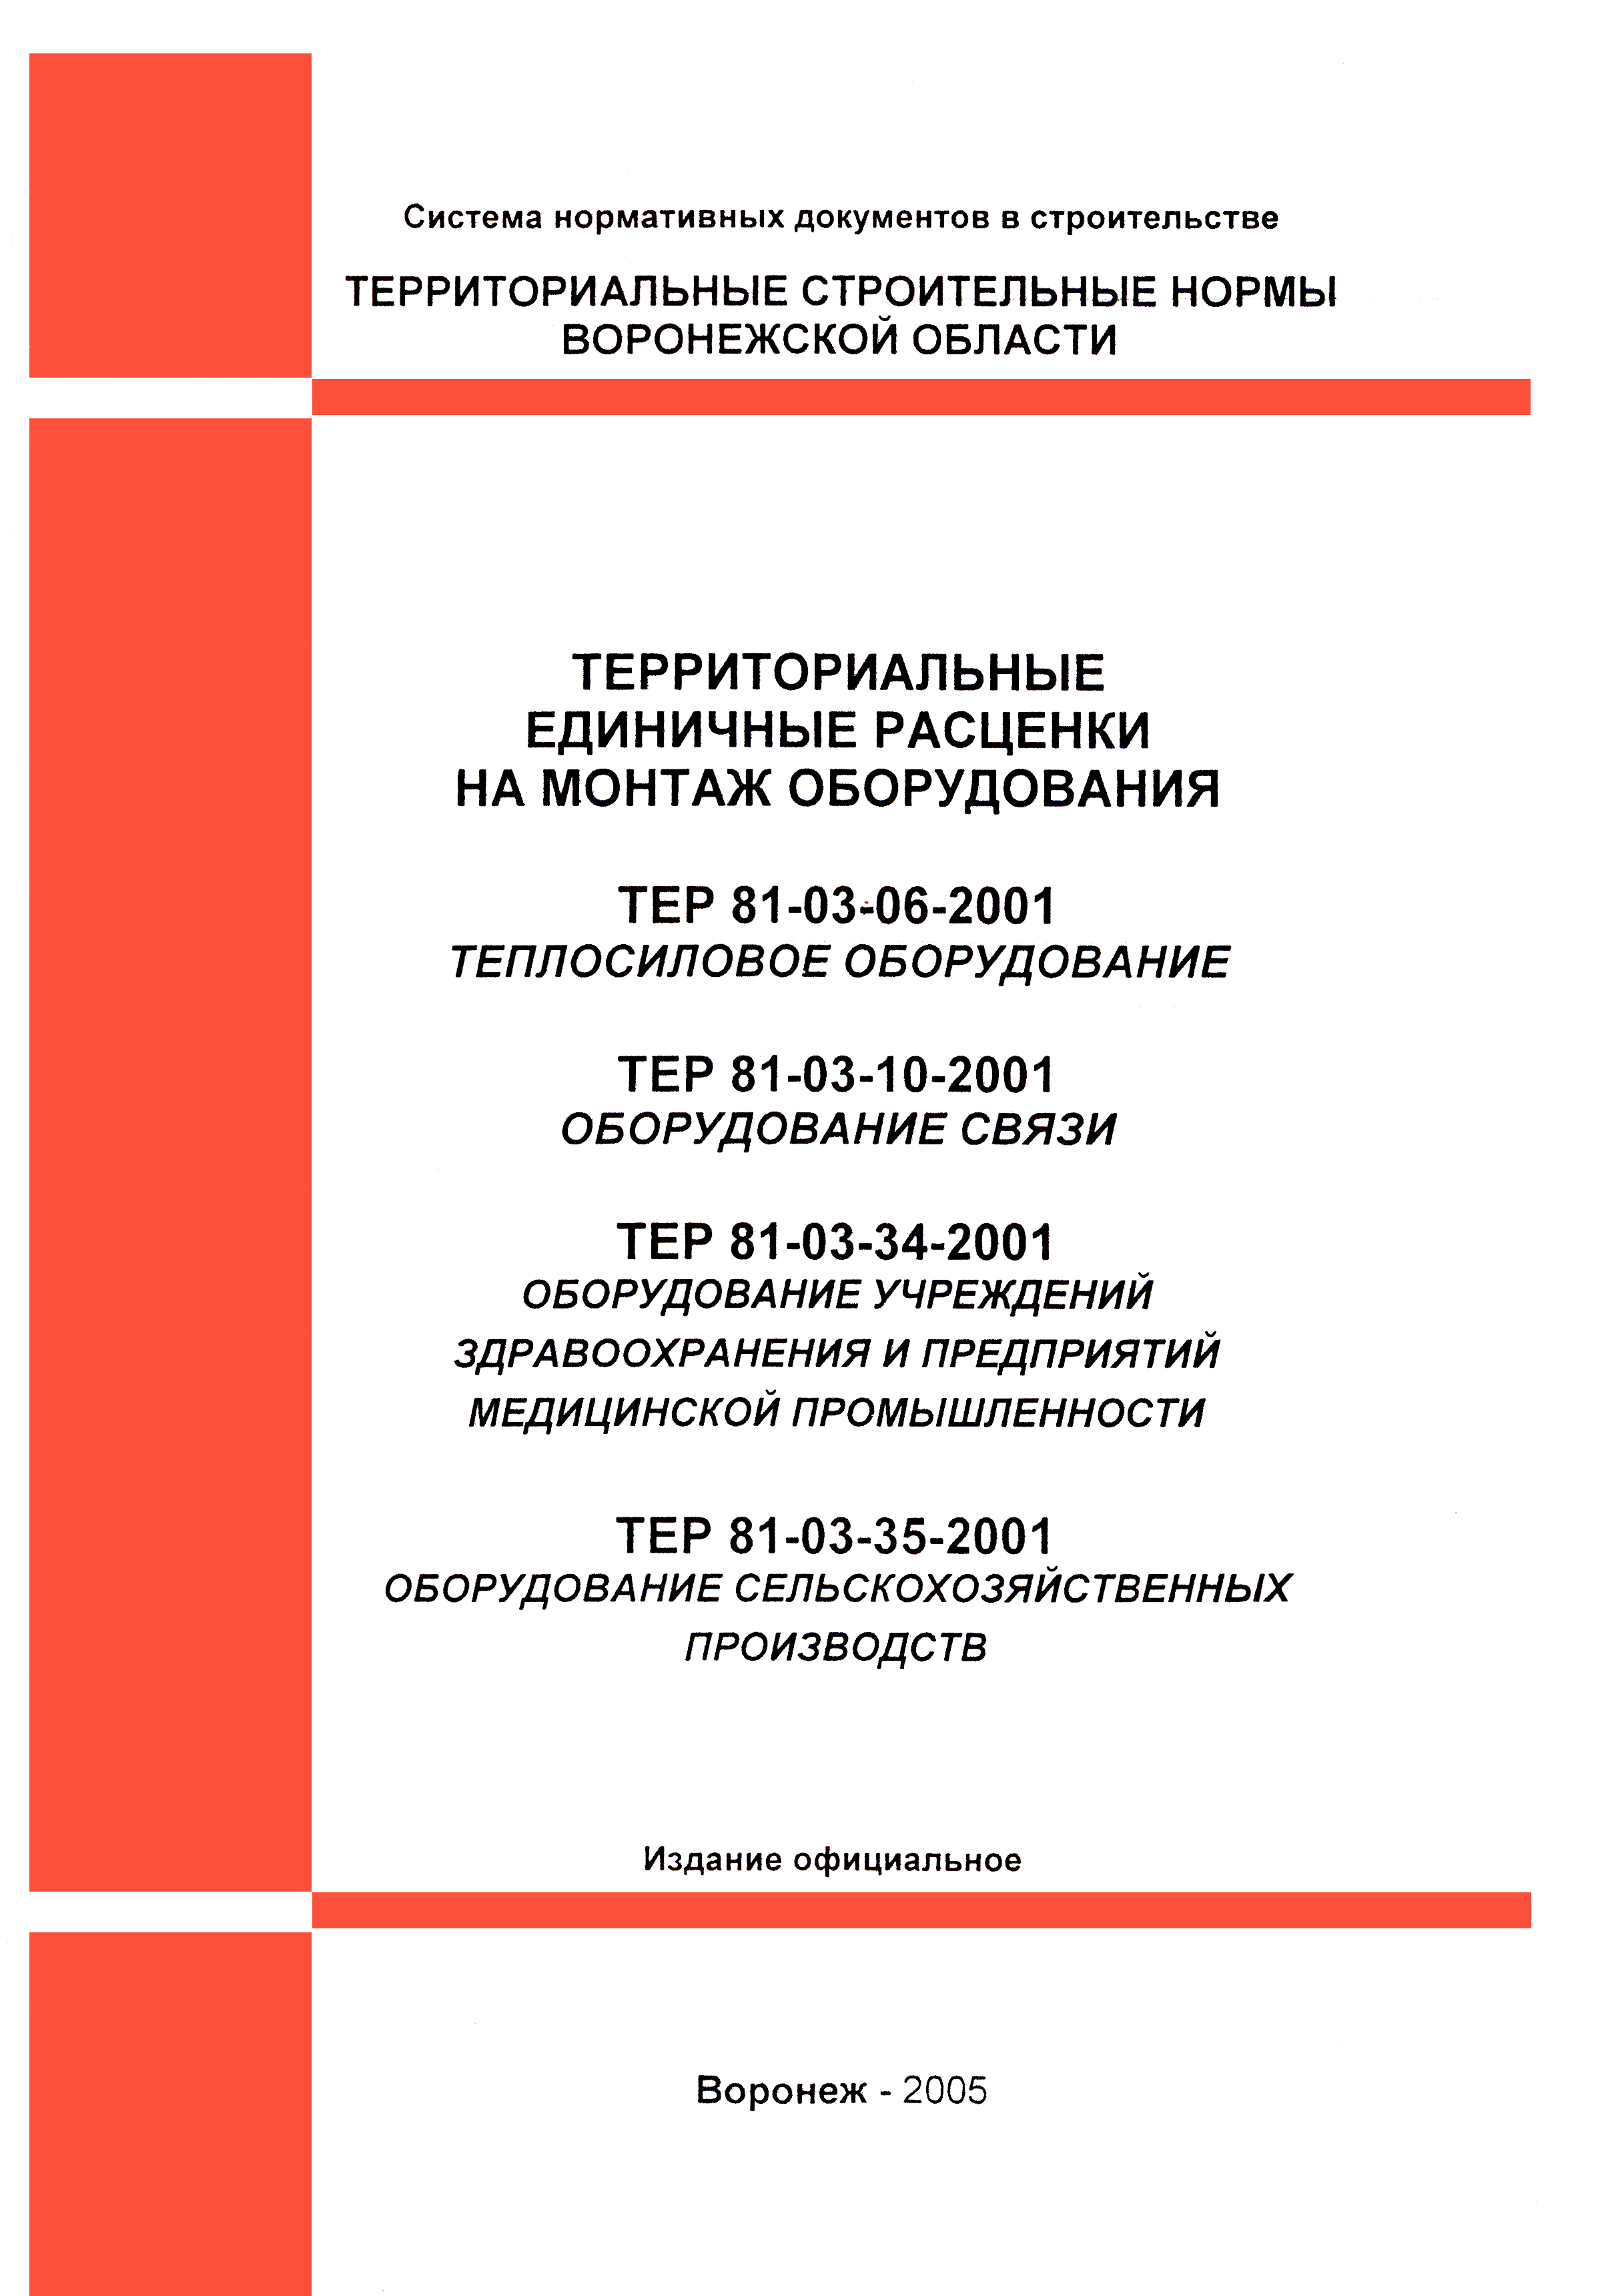 ТЕРм Воронежской области 81-03-10-2001